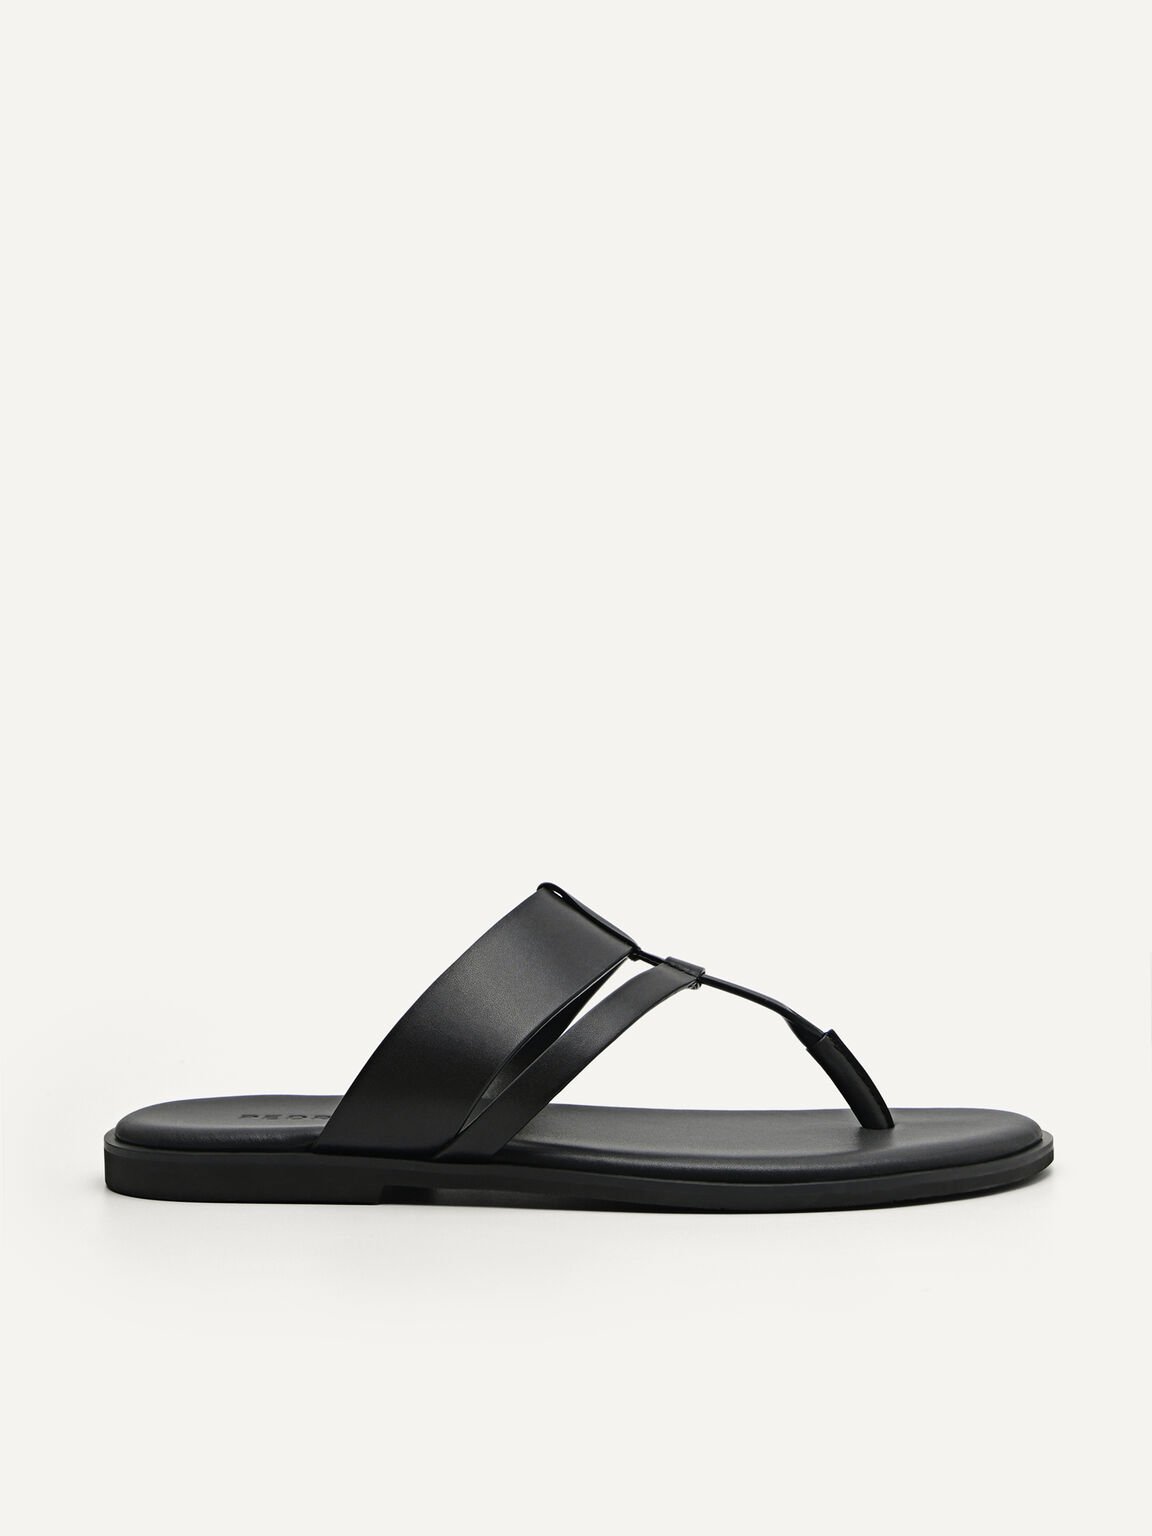 Grid Thong Sandals, Black